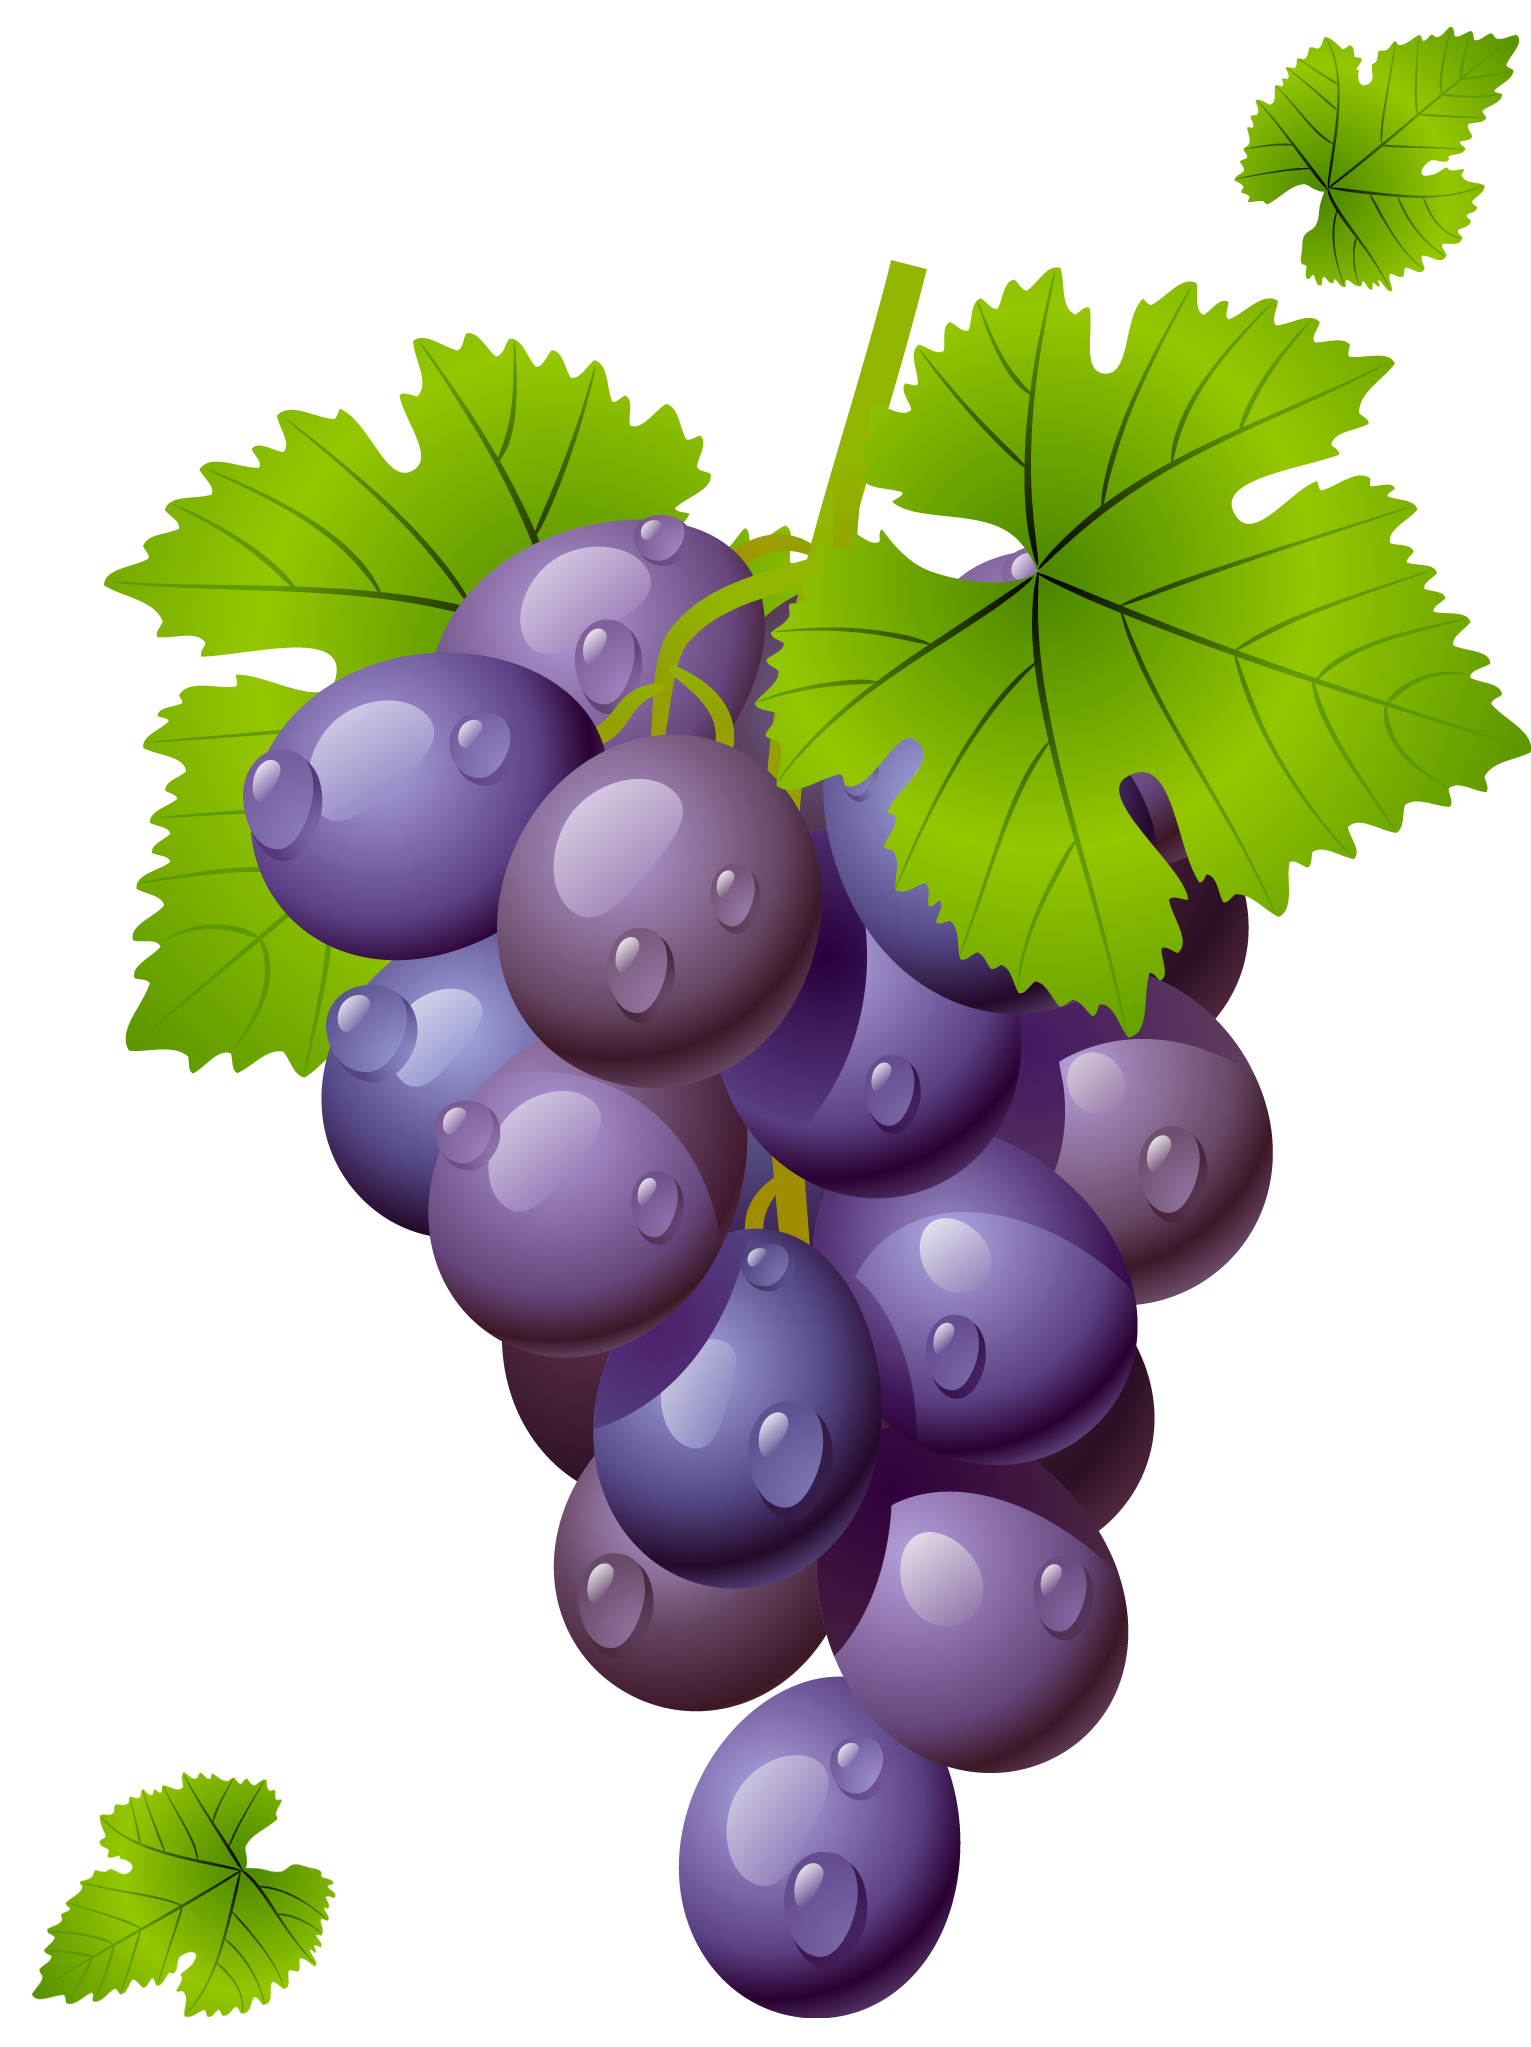 free-grape-leaf-cliparts-download-free-grape-leaf-cliparts-png-images-free-cliparts-on-clipart